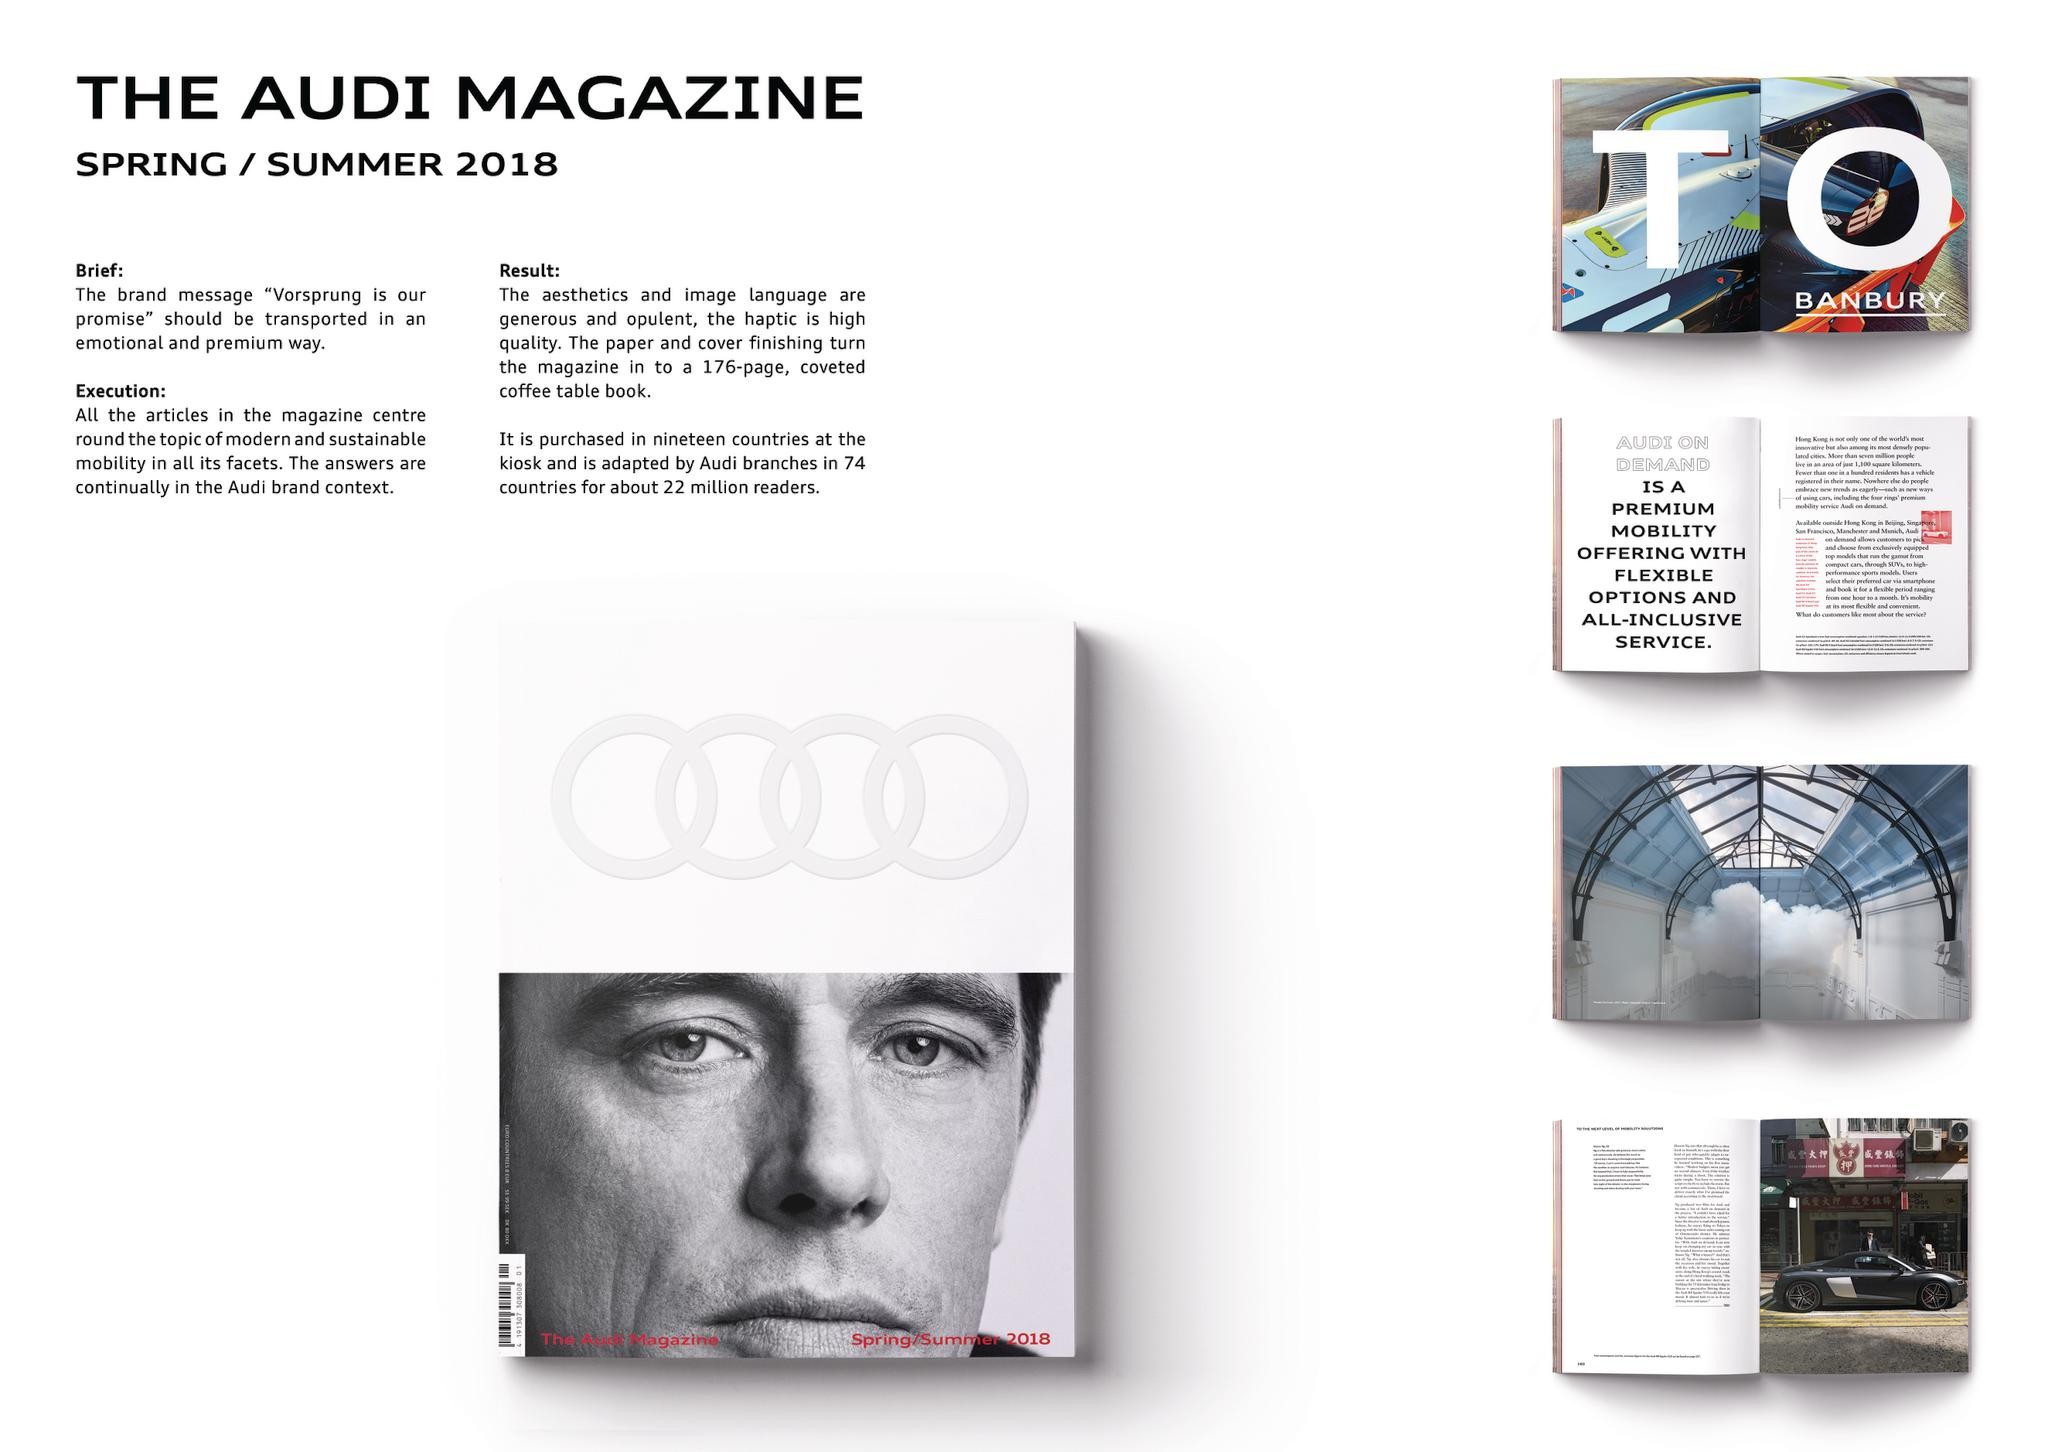 The Audi Magazine Spring/Summer 18